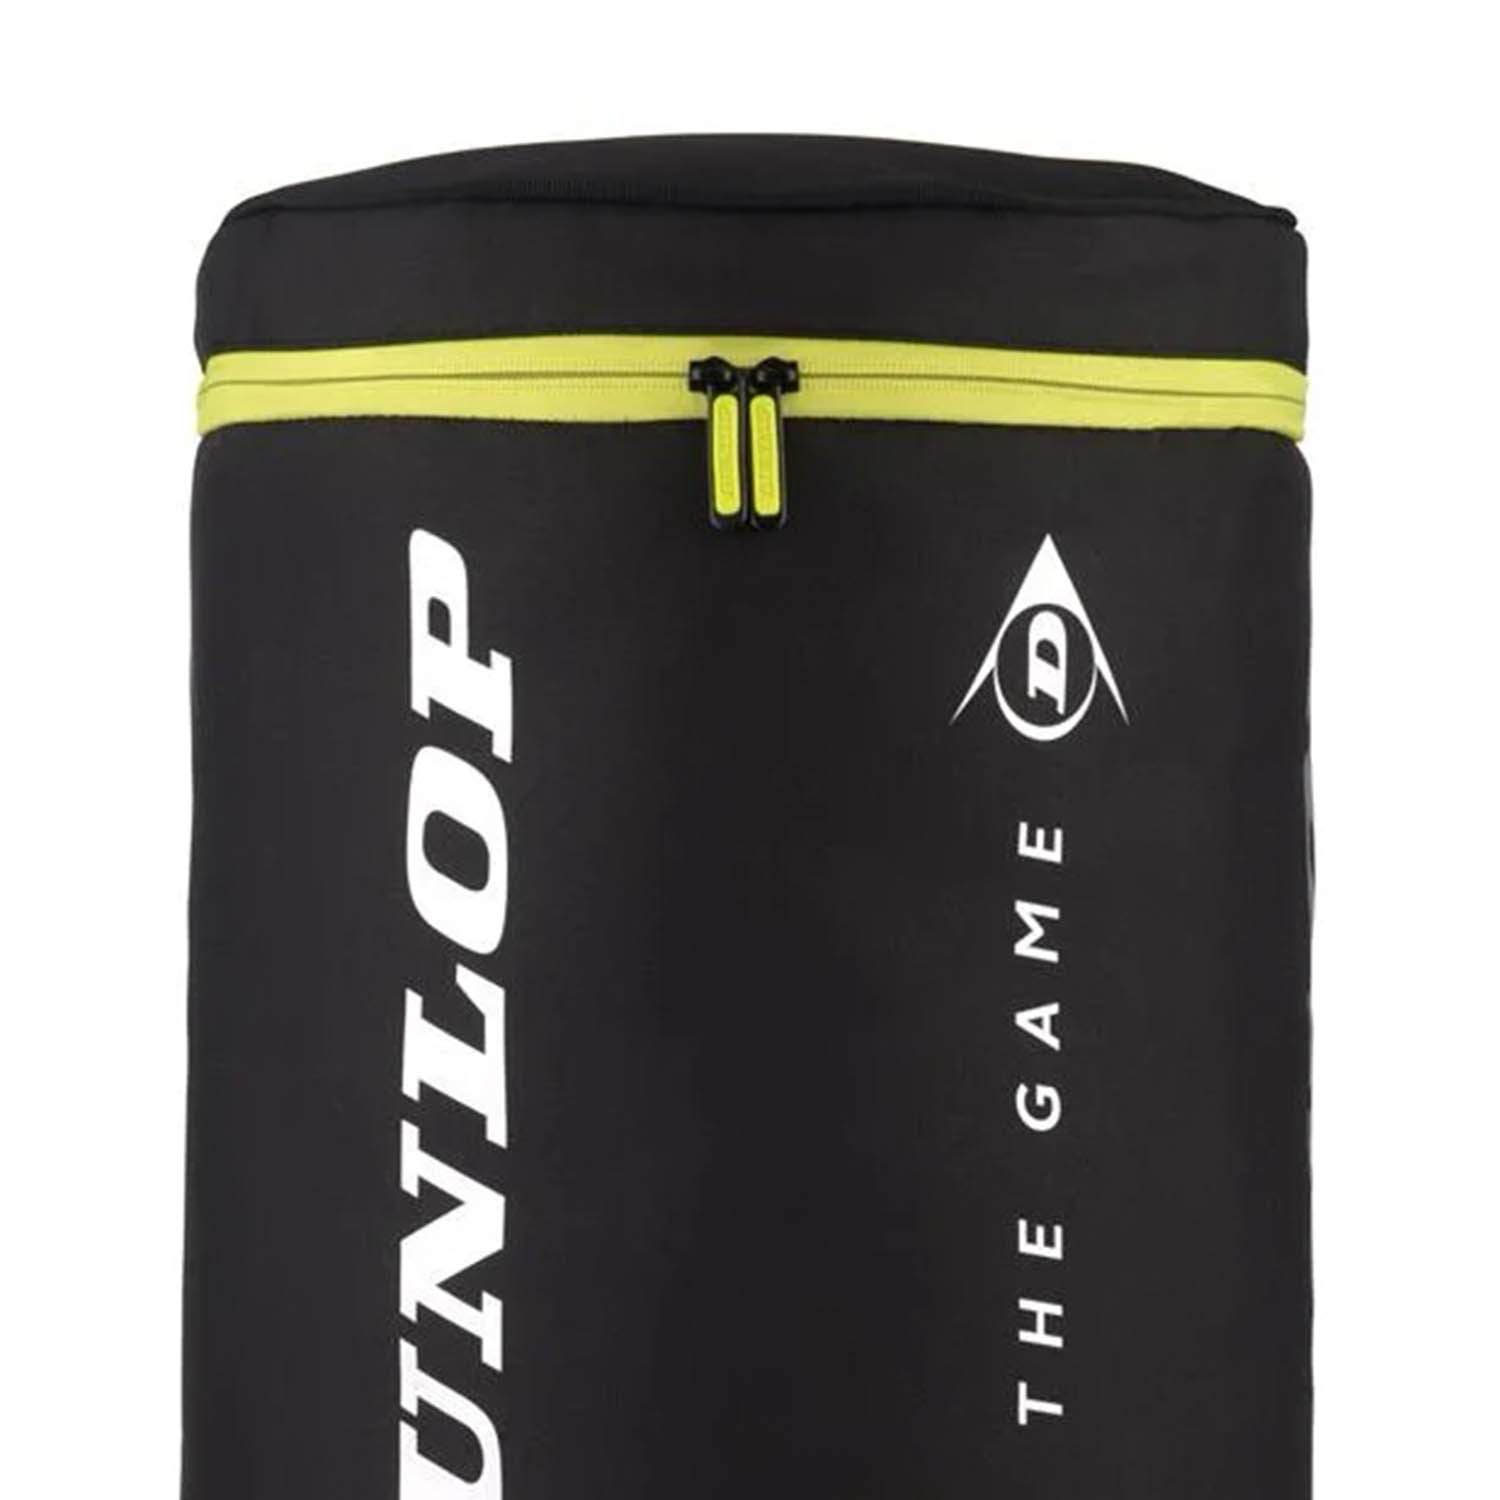 Dunlop Tac Ball x 100 Borsa Porta Palline - Black